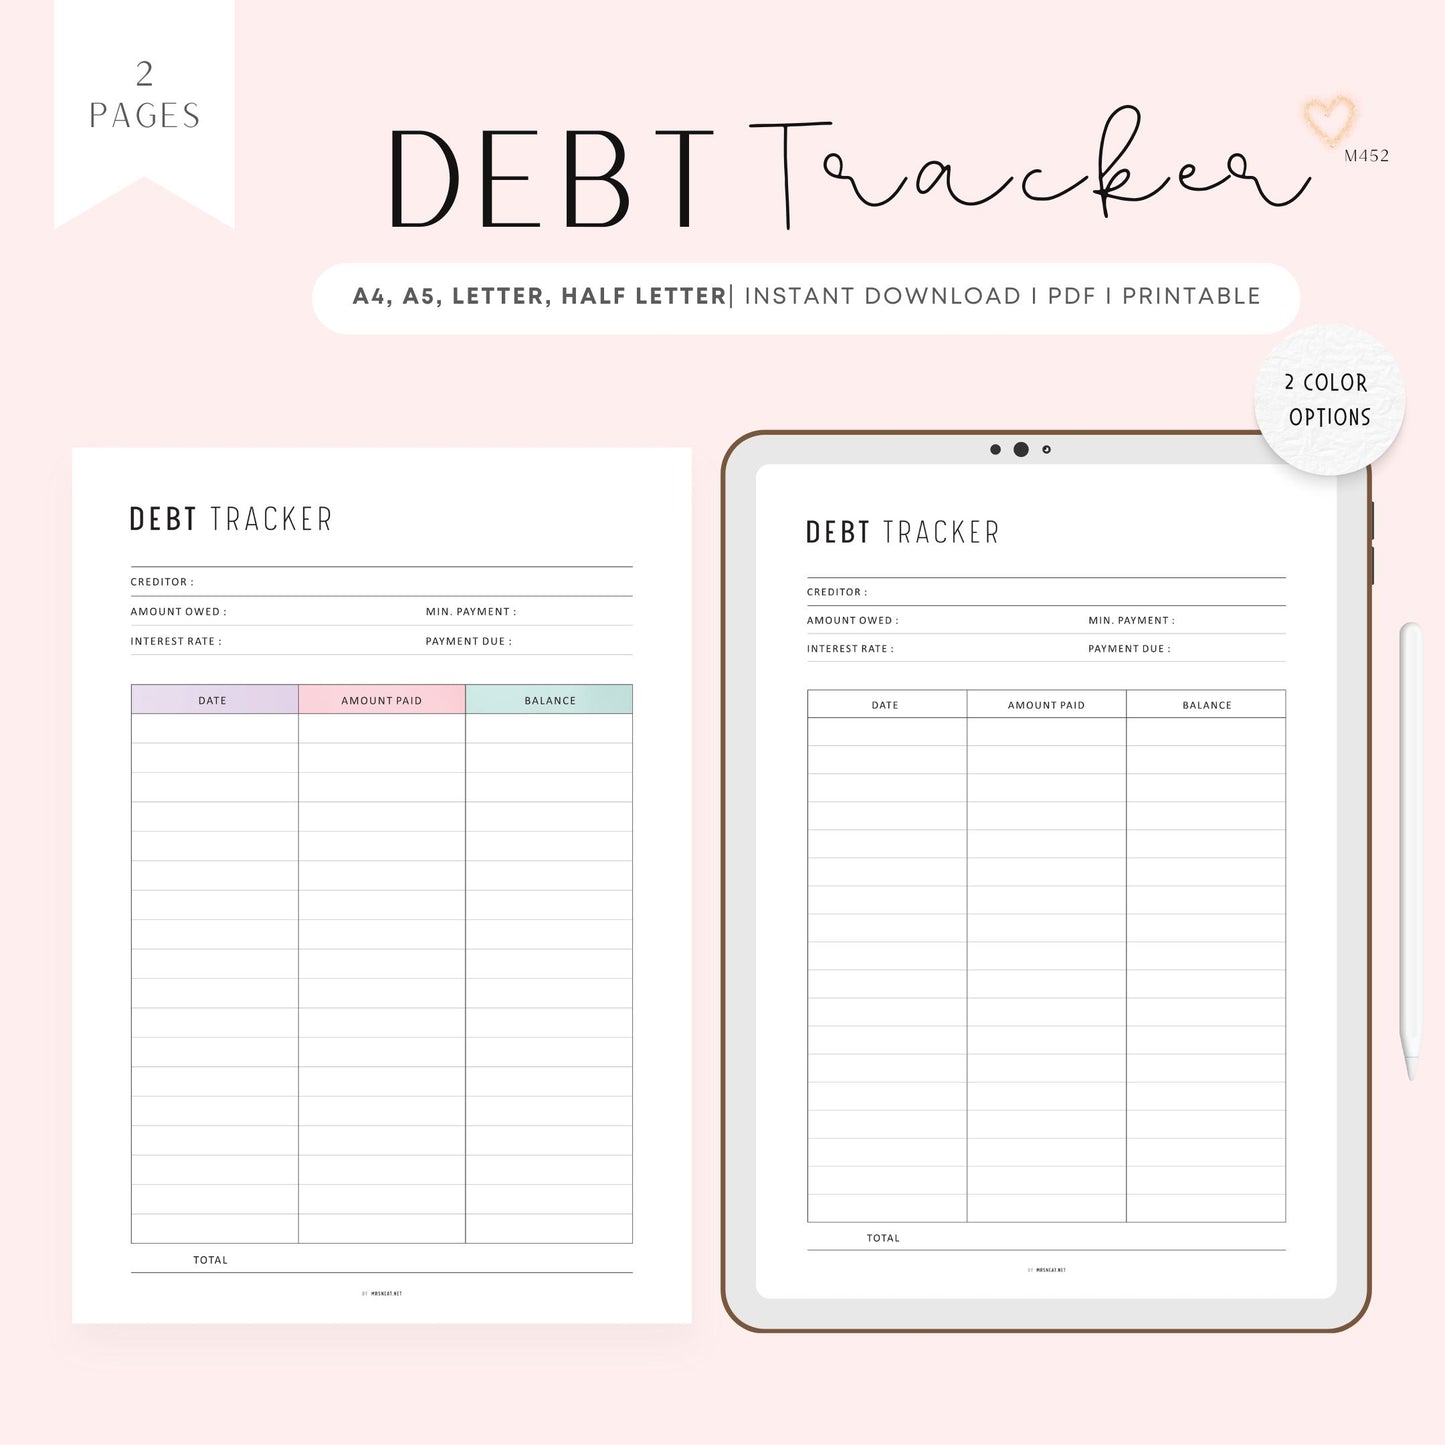 Debt Payment Tracker, Printable, A4, A5, Letter, Half Letter, Digital Planner, PDF, 2 Colors, Instant Download